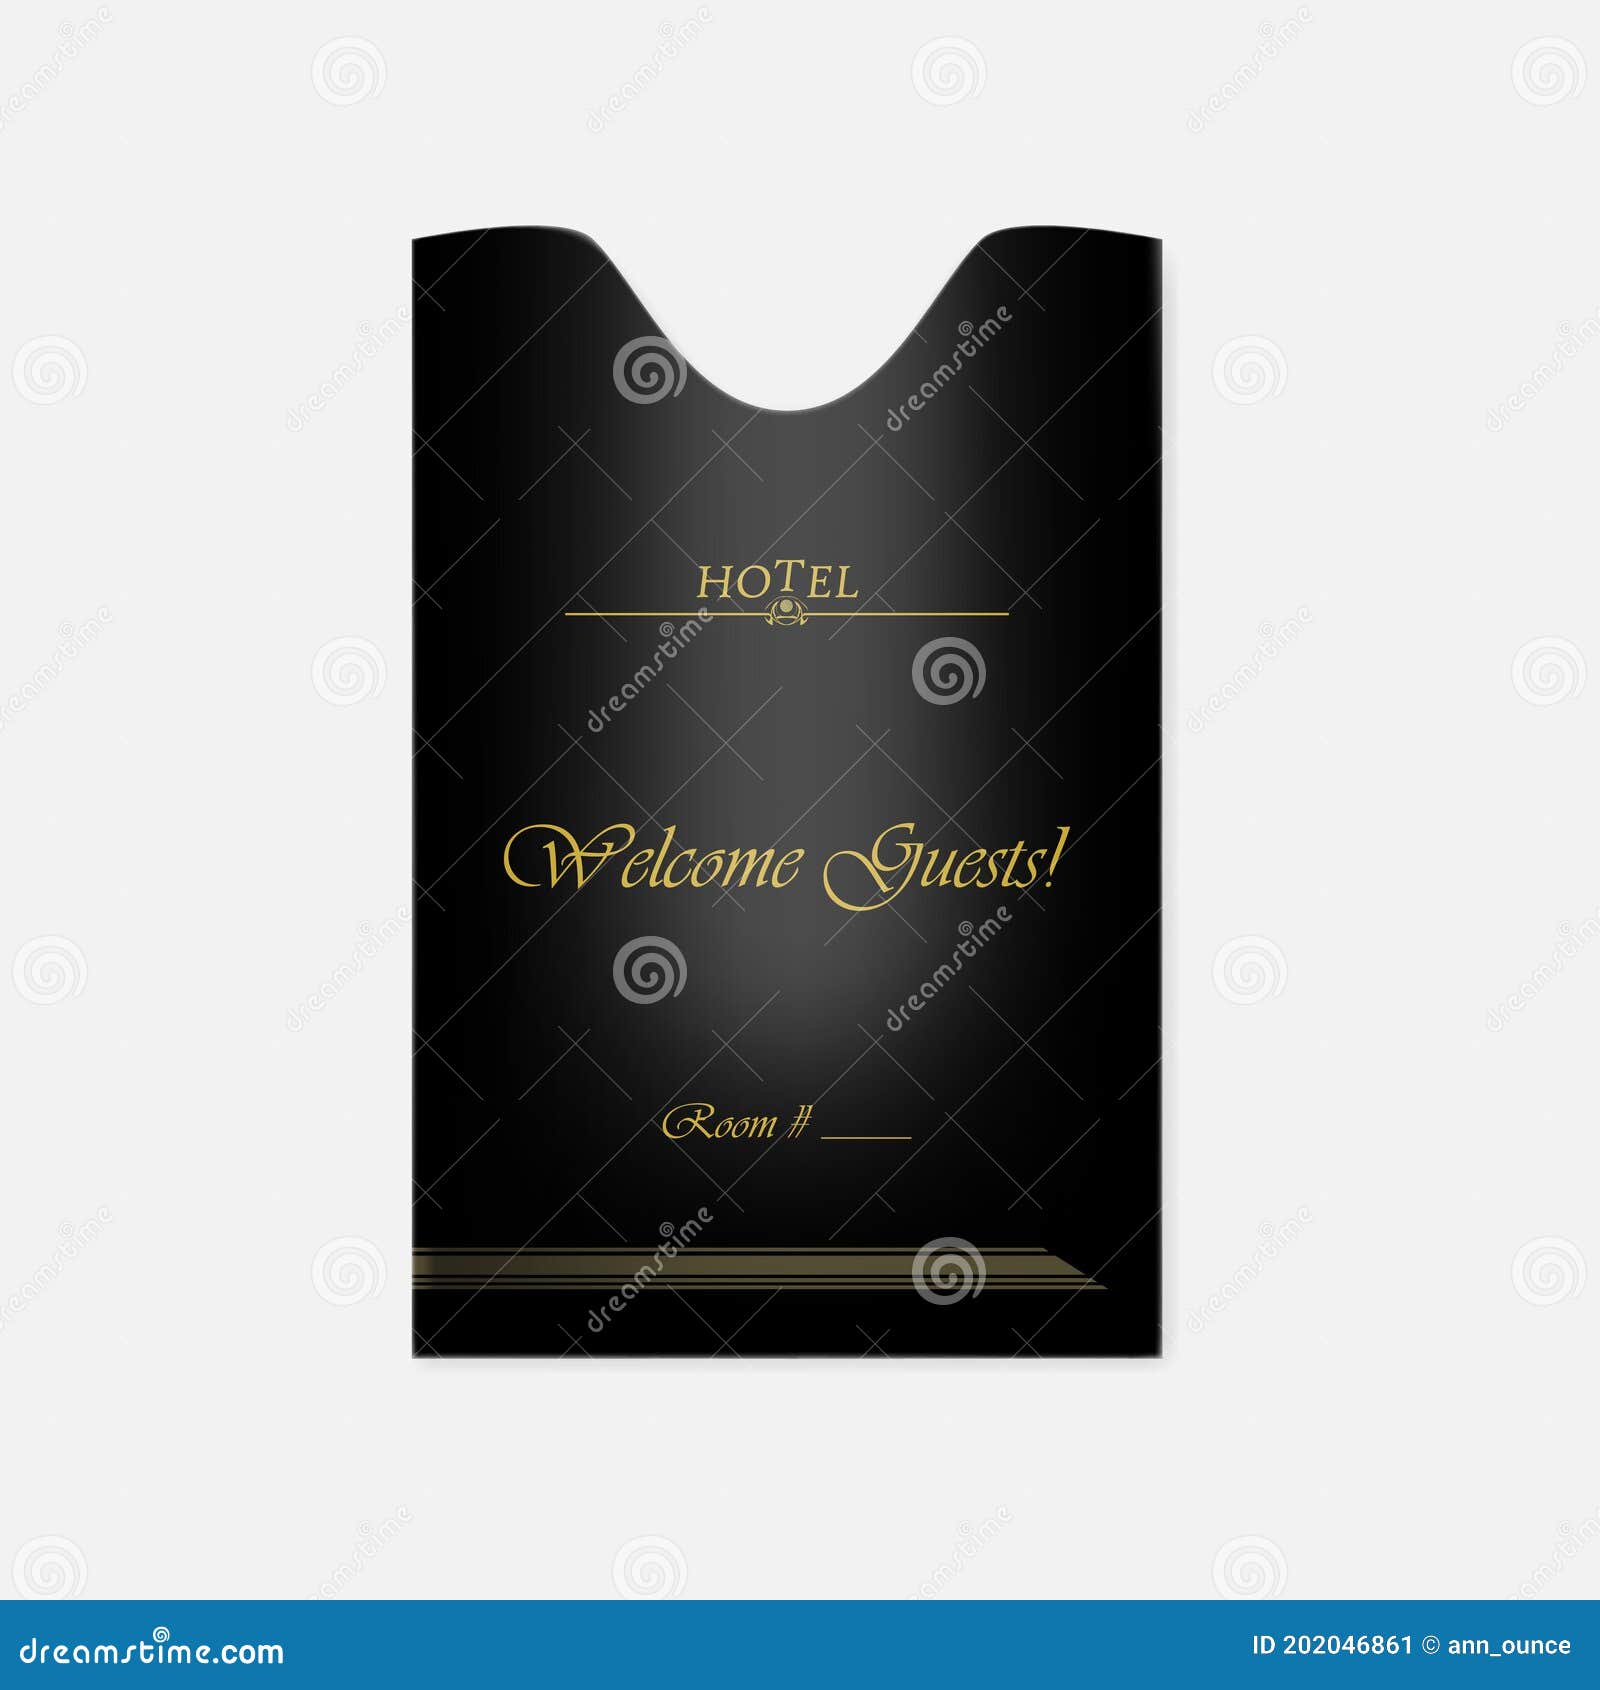 Hotel Key Card Holder - Vertical Black Envelope with Golden Text Inside Hotel Key Card Template